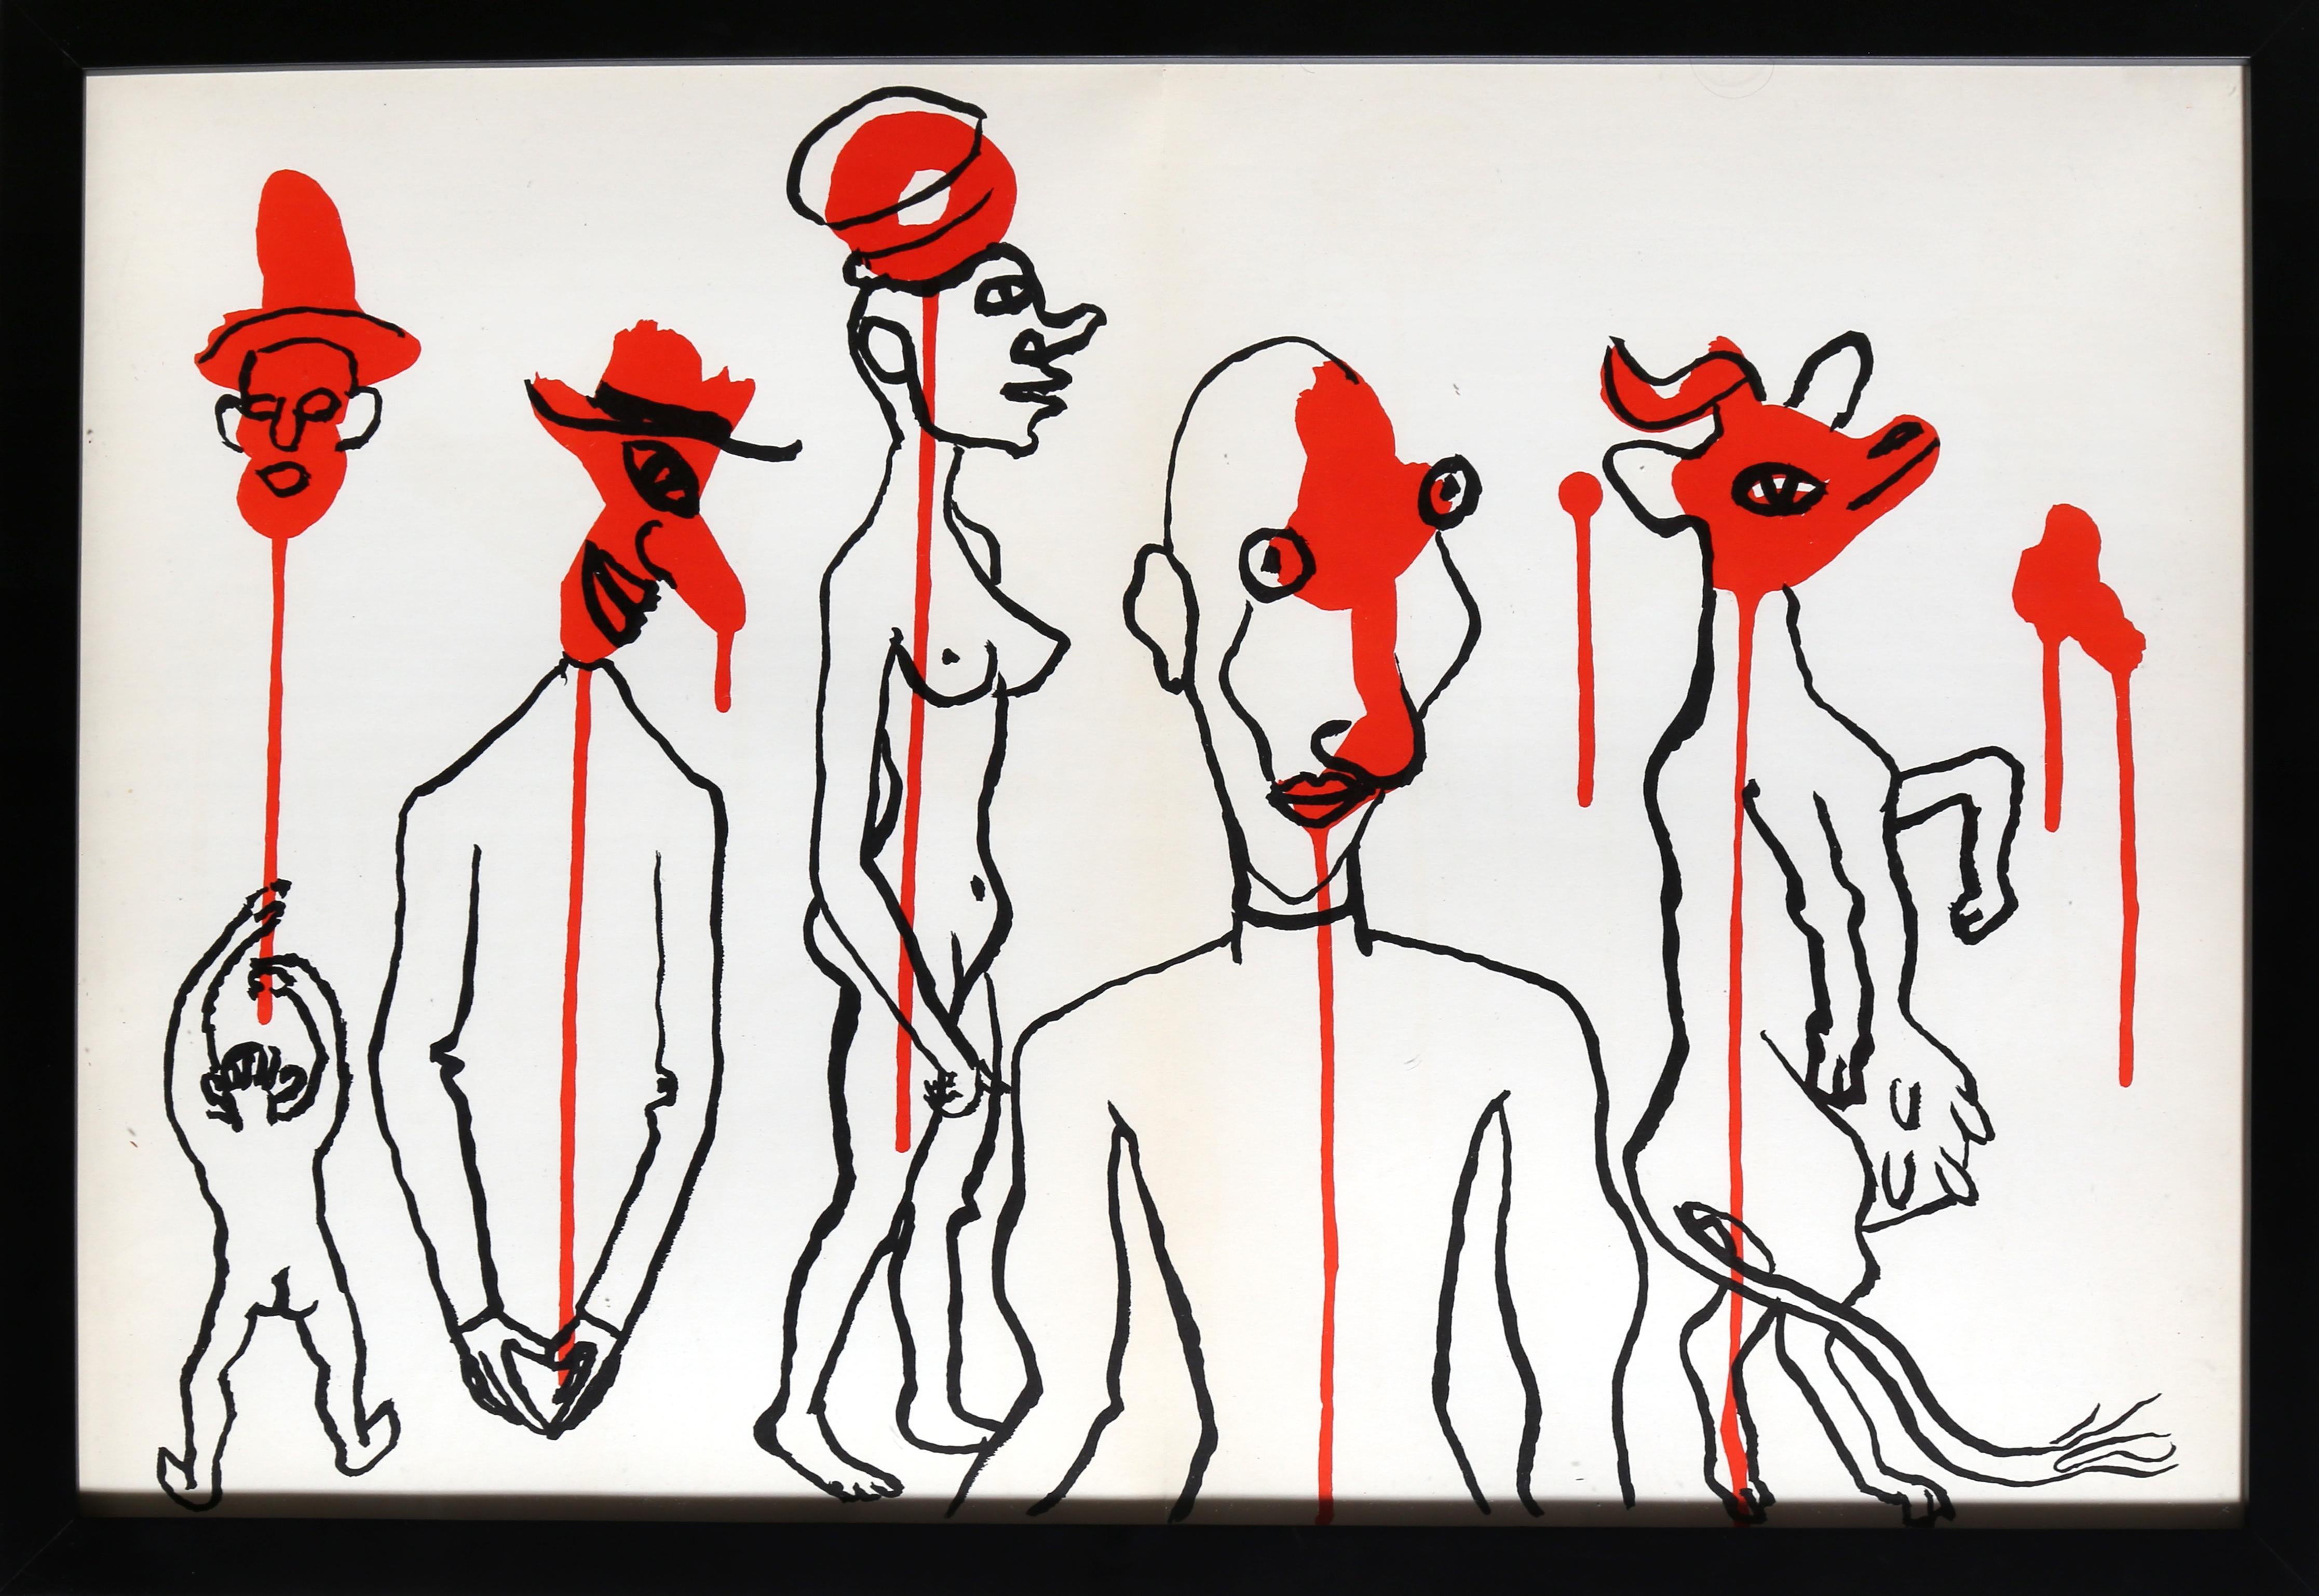 An original Alexander Calder lithograph of colorful clown figures from Derriere Le Miroir, February 1966

Artist: Alexander Calder, American (1898 - 1976)
Title: Les Gueules Degoulinantes from Derriere Le Miroir
Year: 1966
Medium: Lithograph
Size: